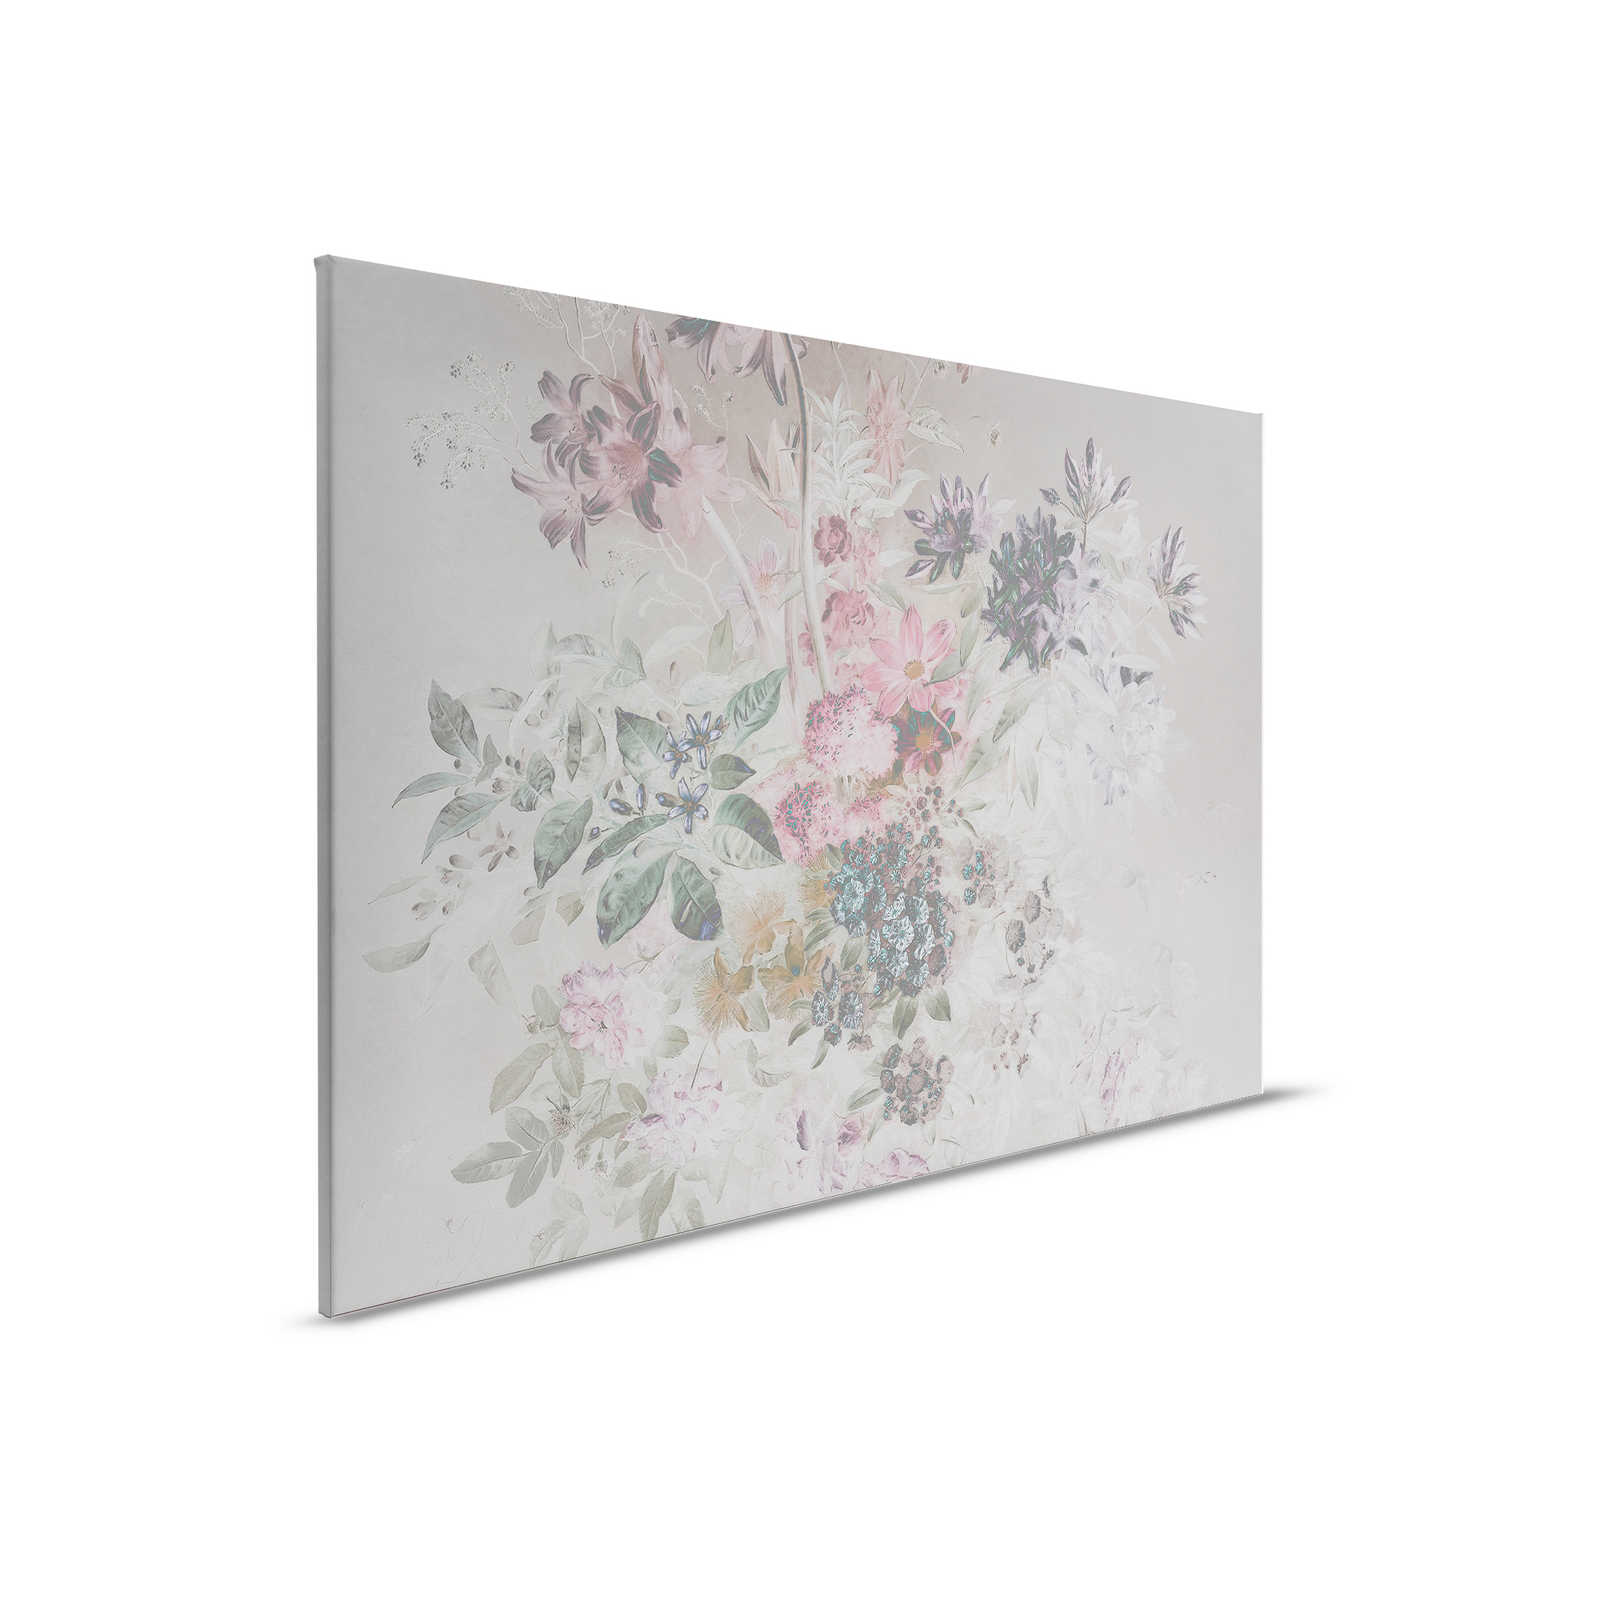         Blumen Leinwandbild mit Pastellfarben Design | rosa, grau – 0,90 m x 0,60 m
    